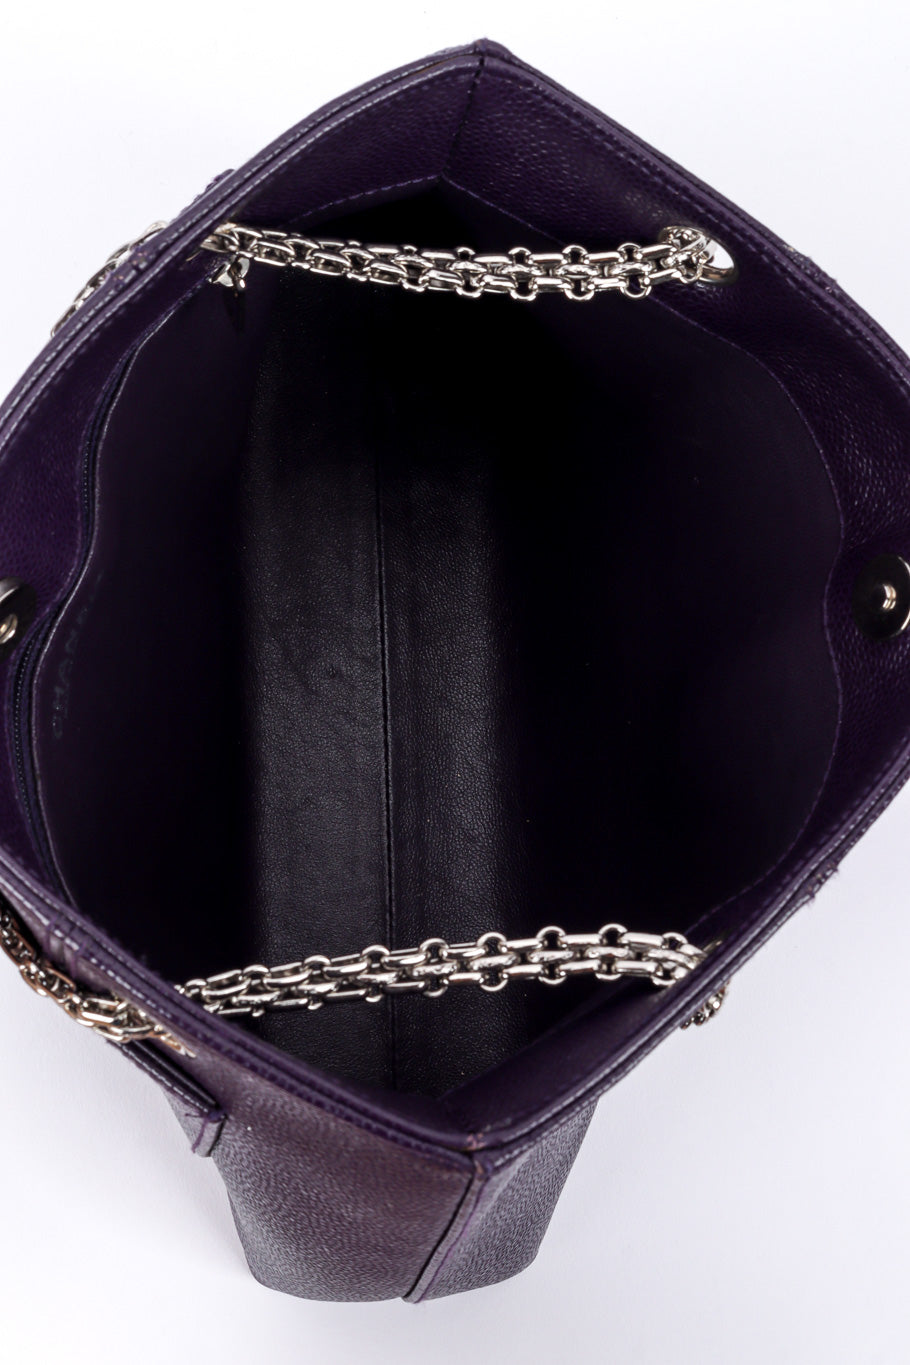 Chanel Bijoux Chain Shoulder Bag interior @recessla